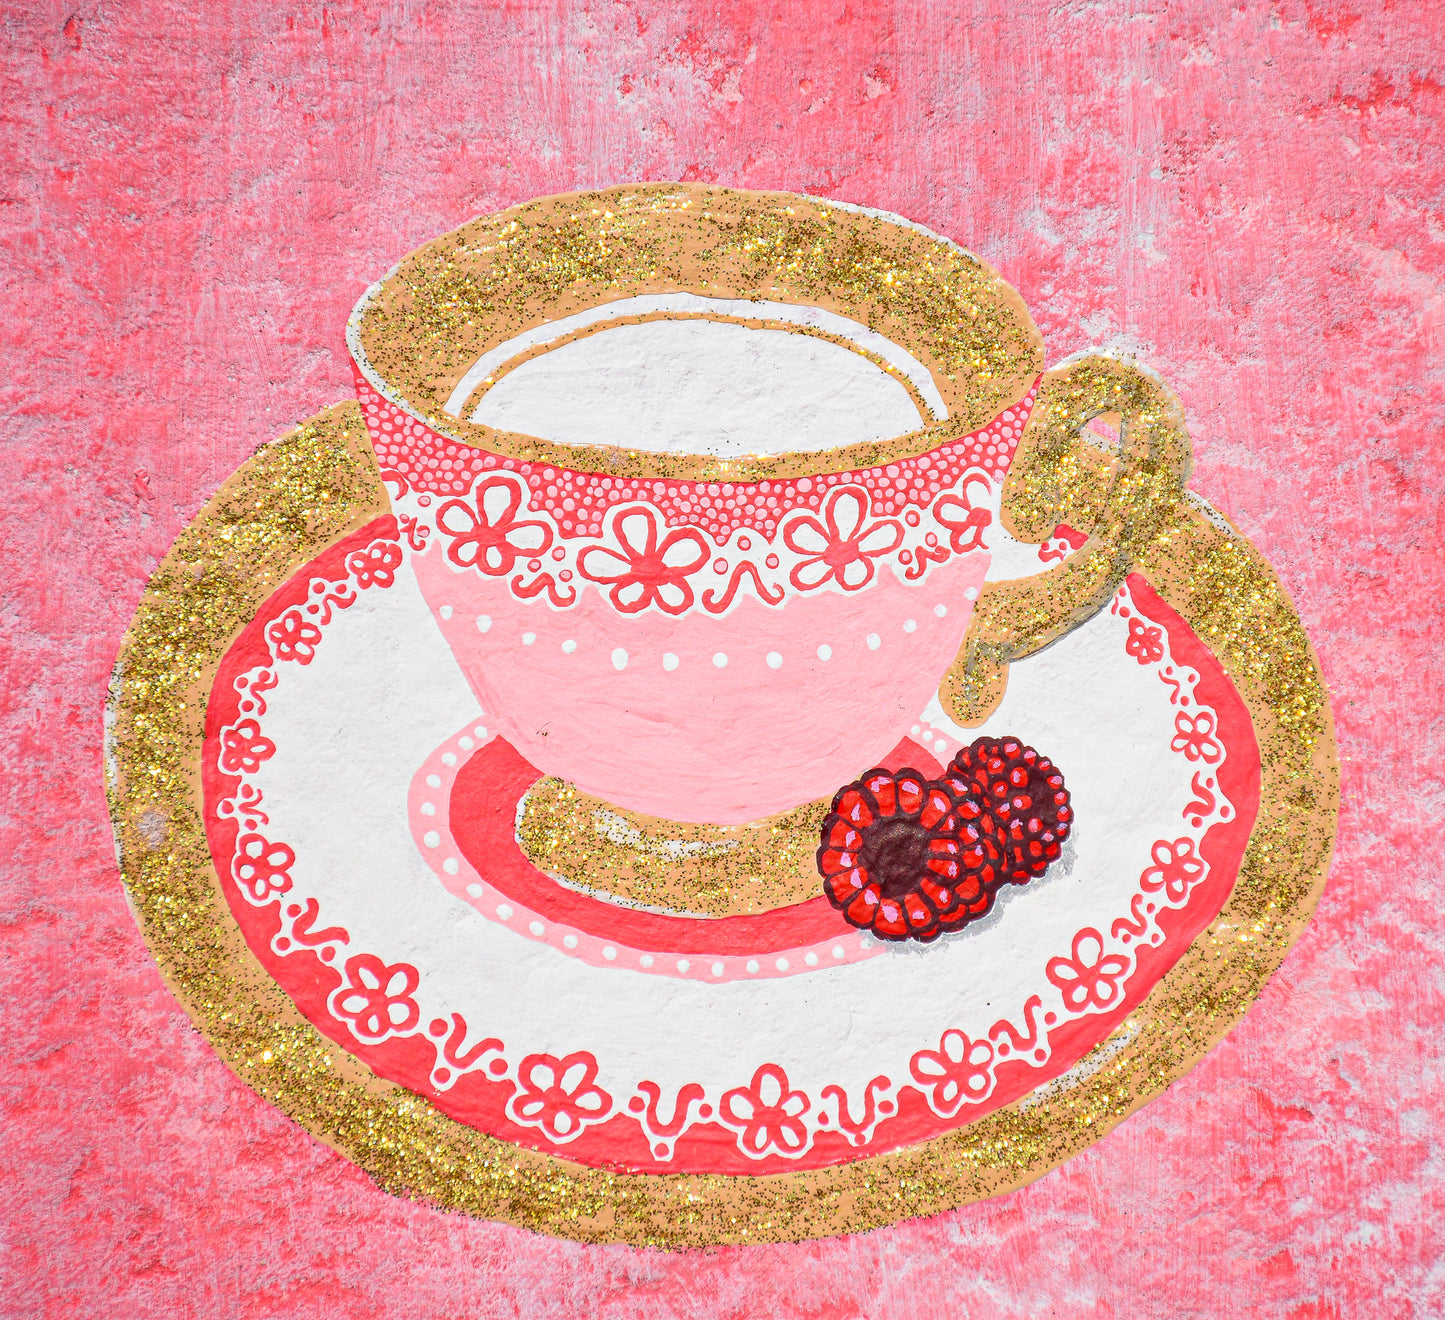 Raspberries and Tea